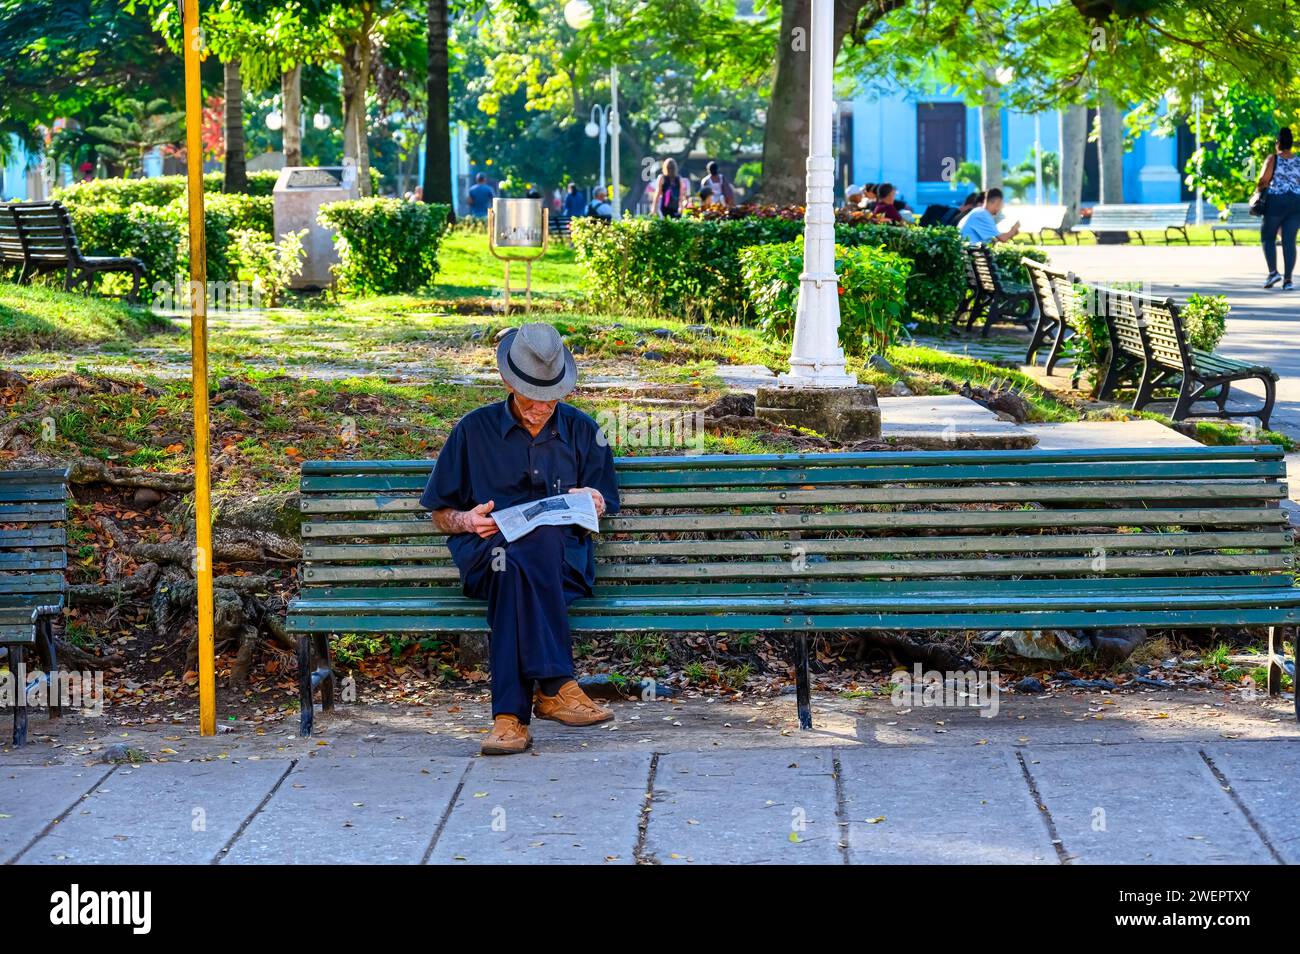 Senior man reading newspaper in park bench, Santa Clara, Cuba Stock Photo